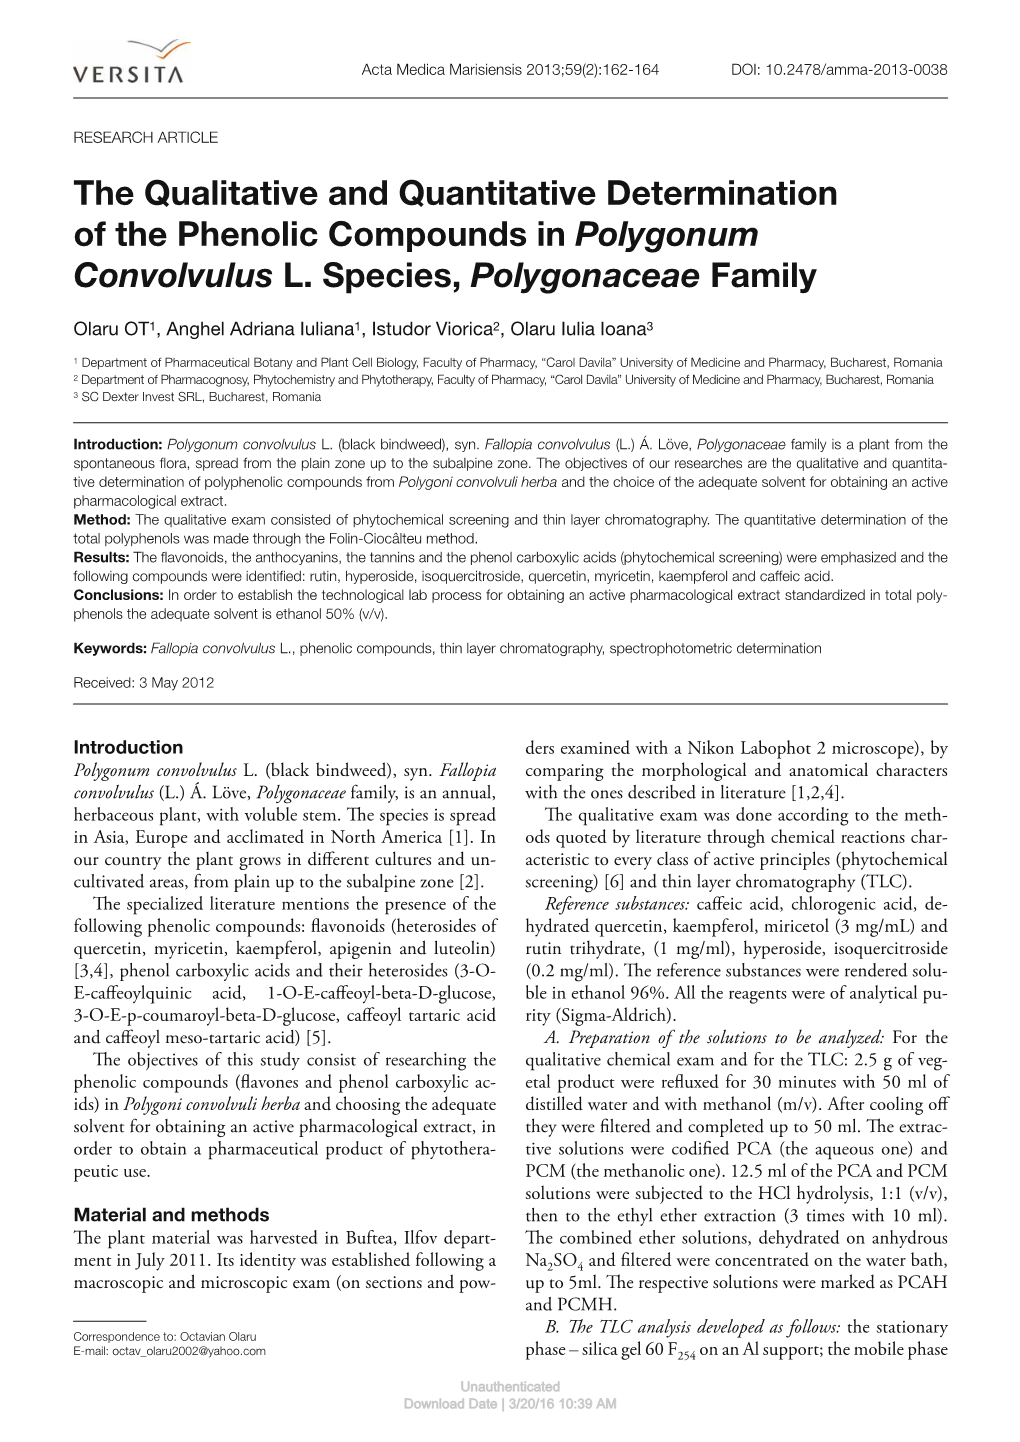 The Qualitative and Quantitative Determination of the Phenolic Compounds in Polygonum Convolvulus L